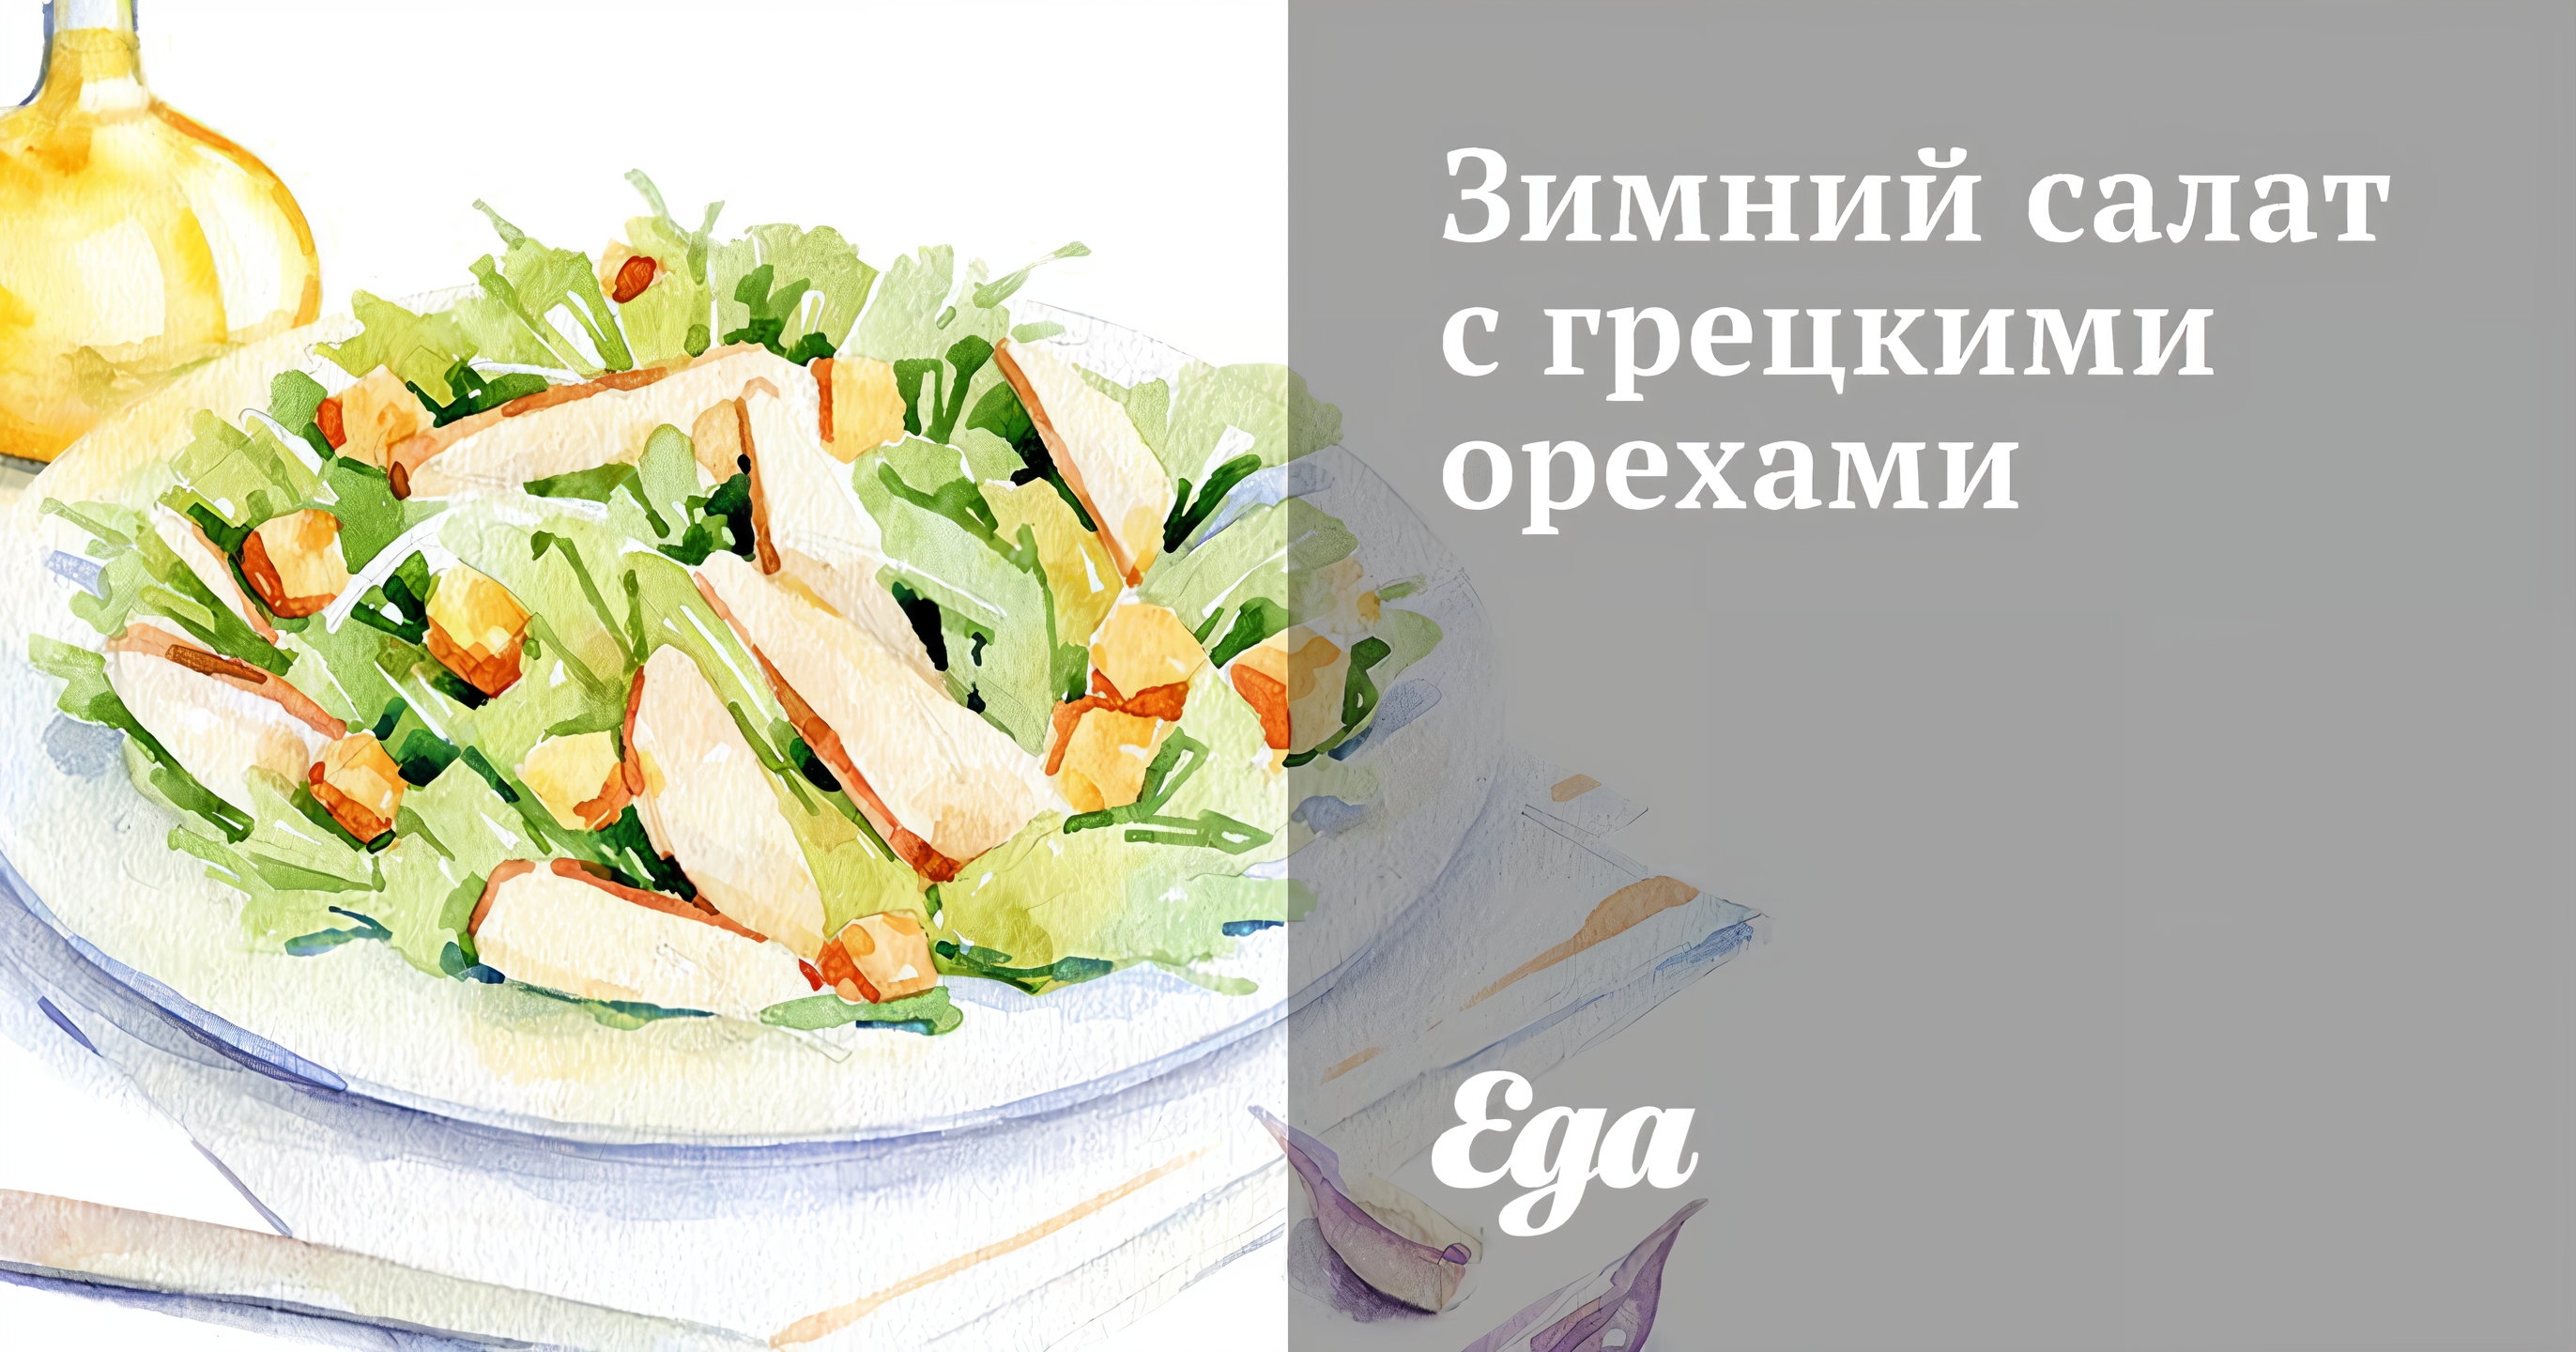 Зимний салат с грецкими орехами